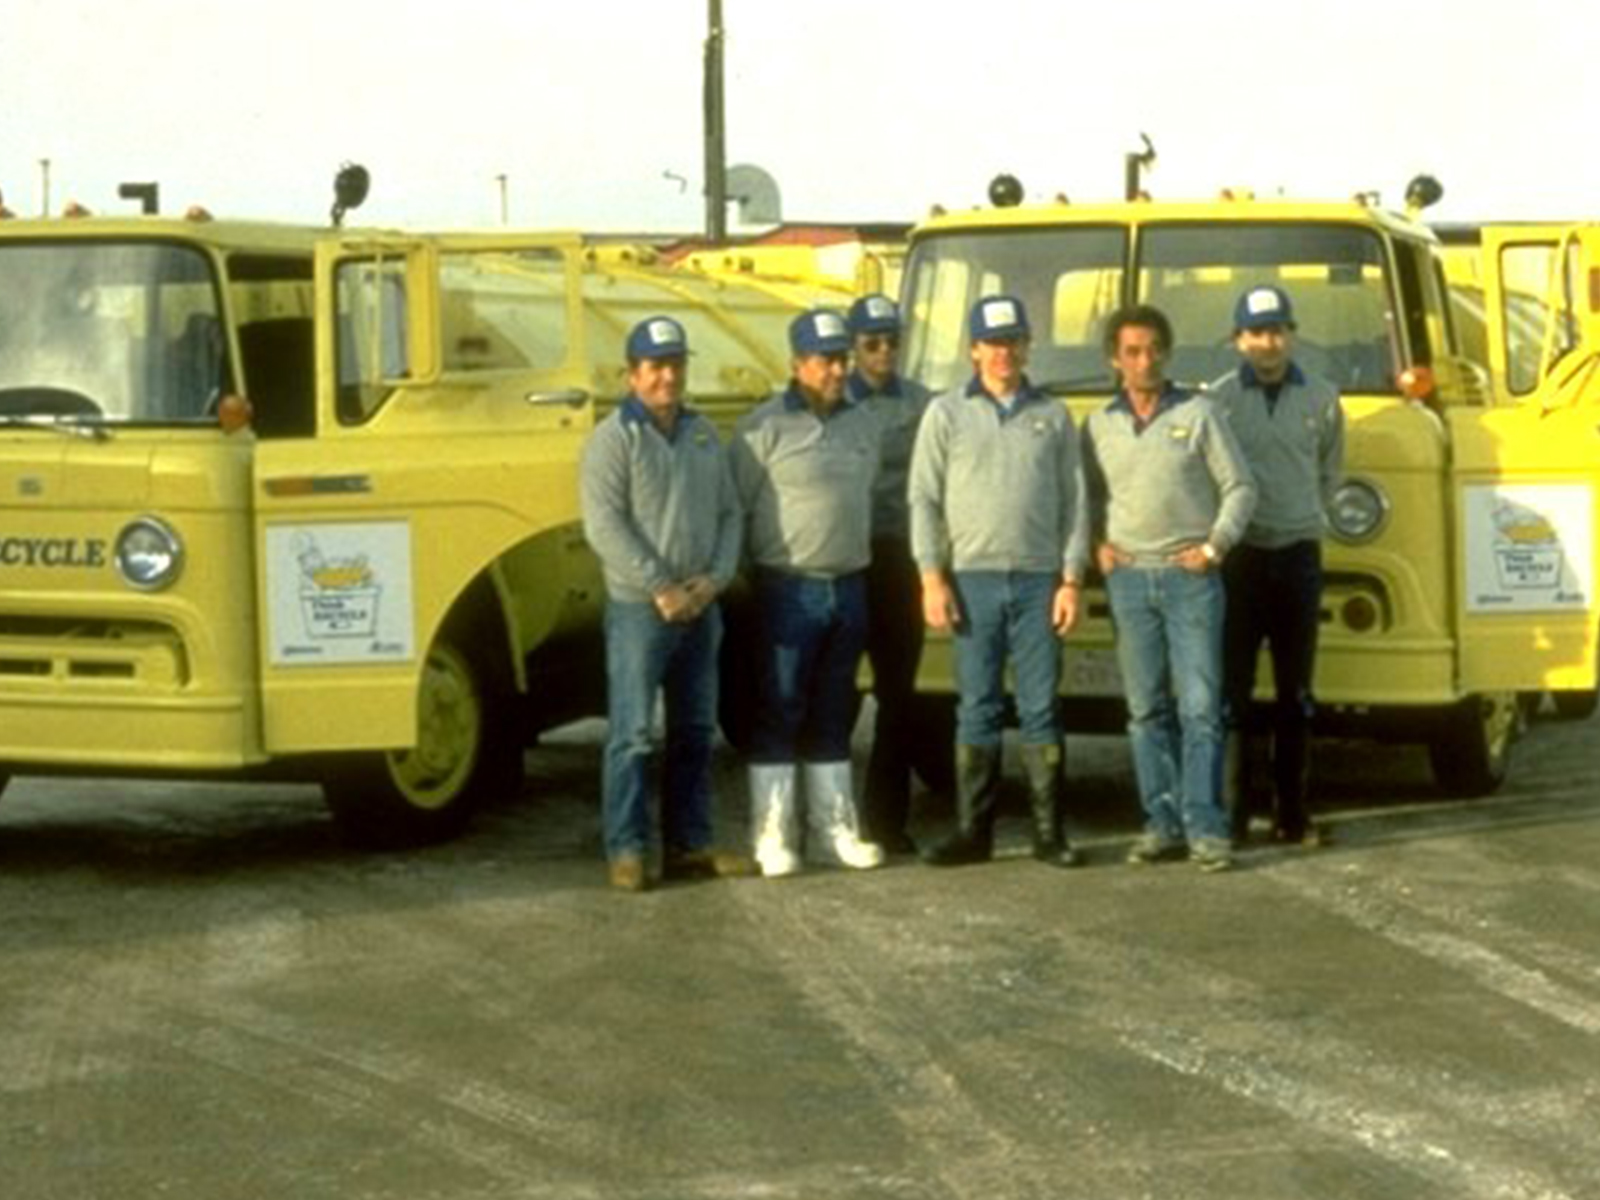 1986 - Curbside Recycling Pilot Begins